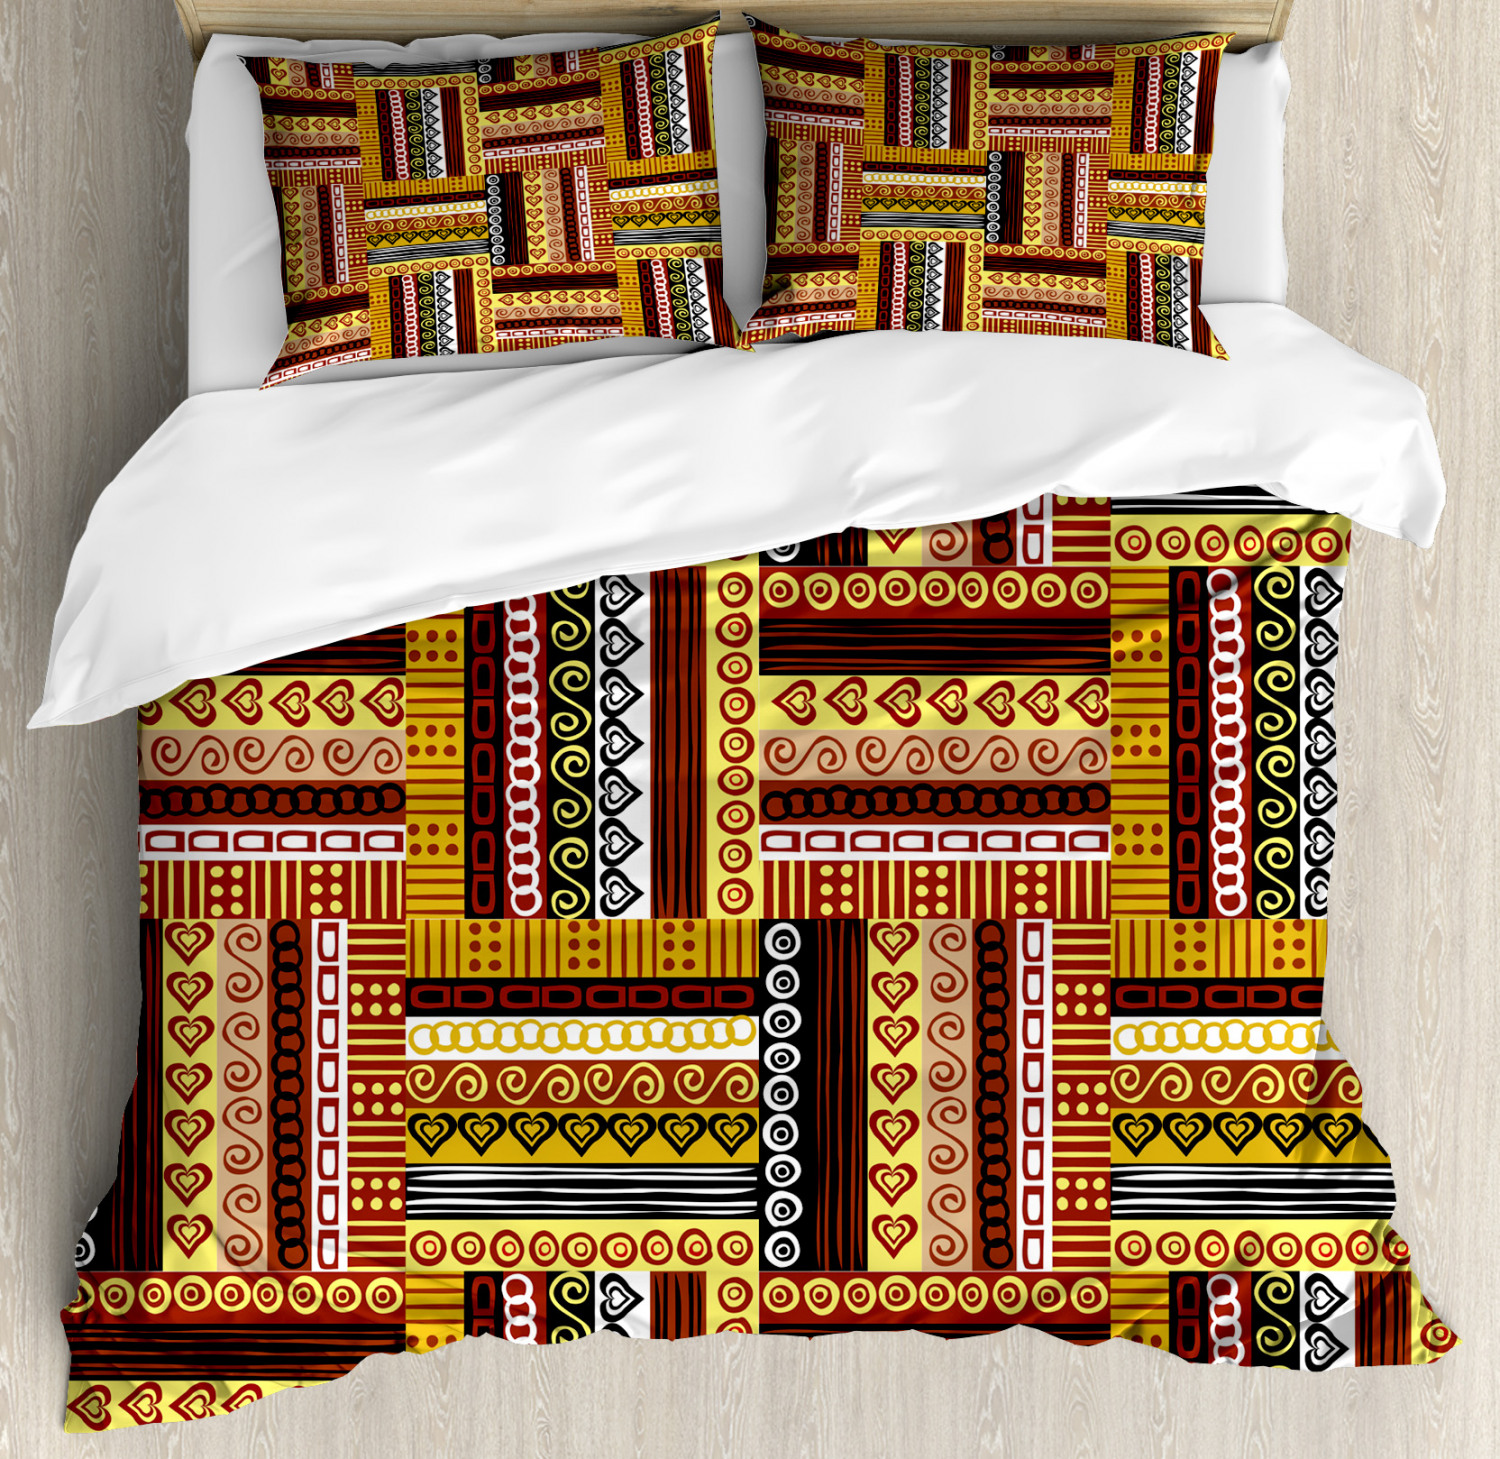 Ethnic Duvet Cover Set With Pillow Shams African Oriental Motifs